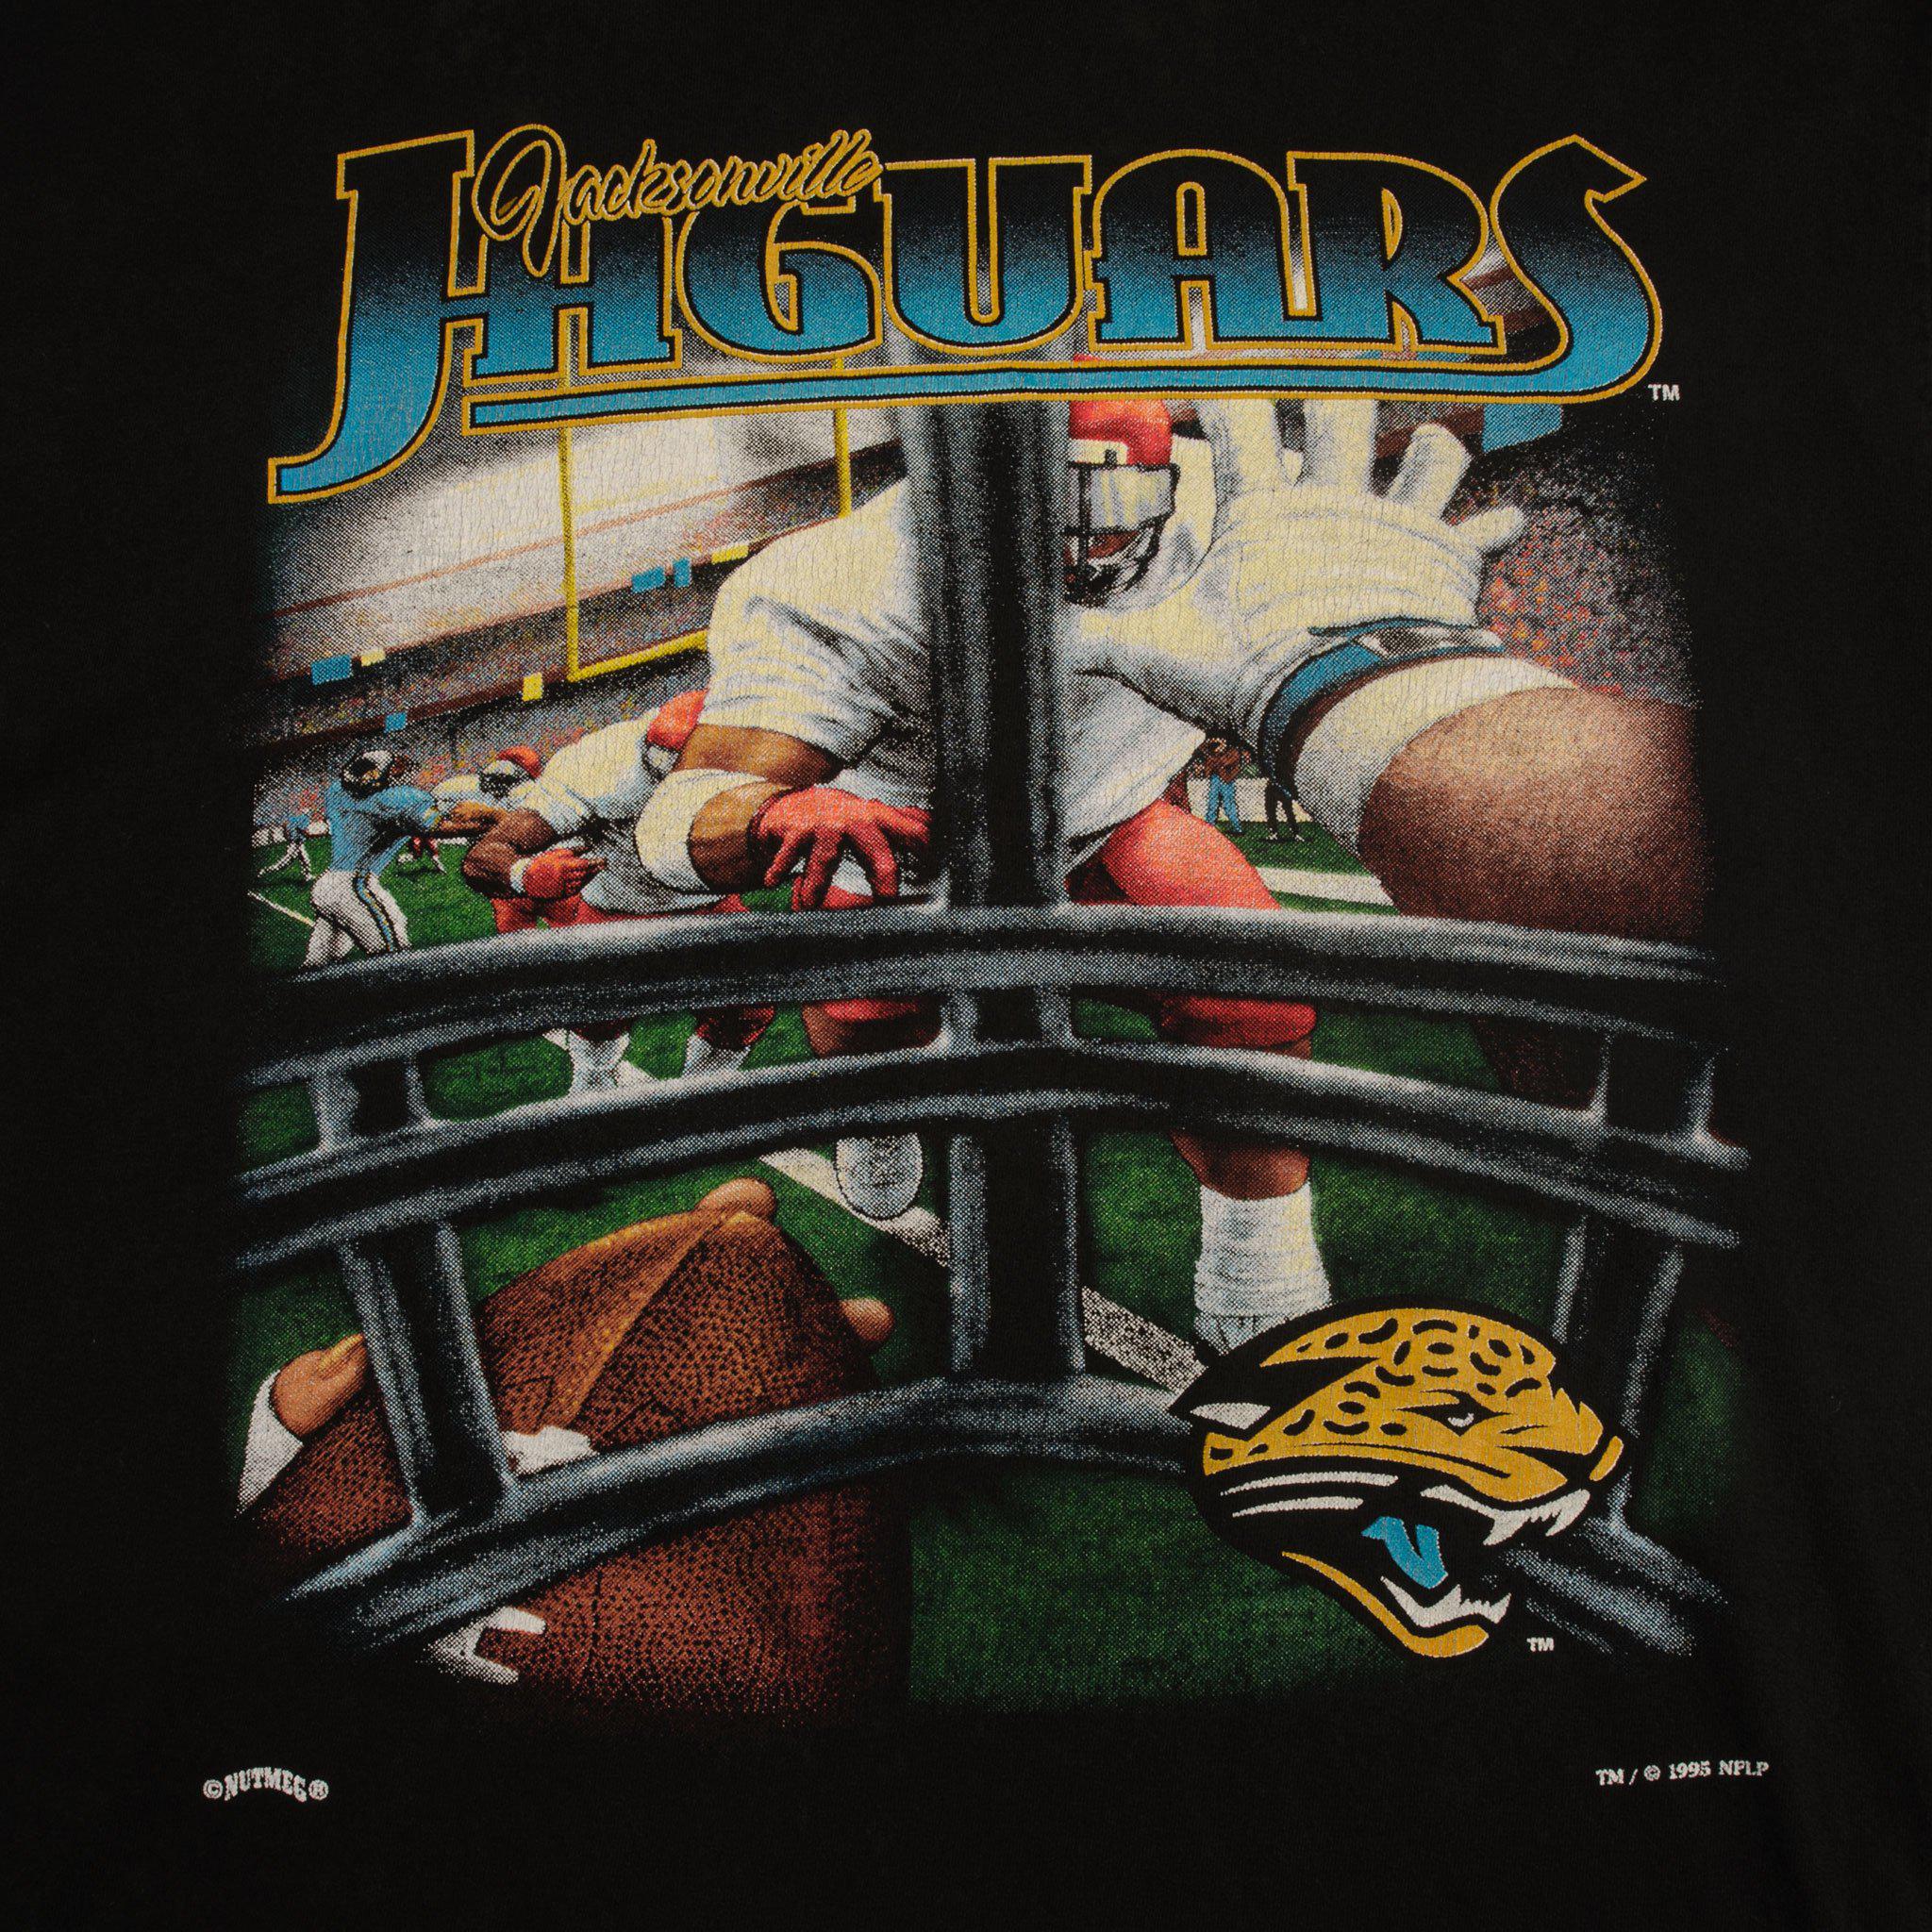 vintage jacksonville jaguars shirt